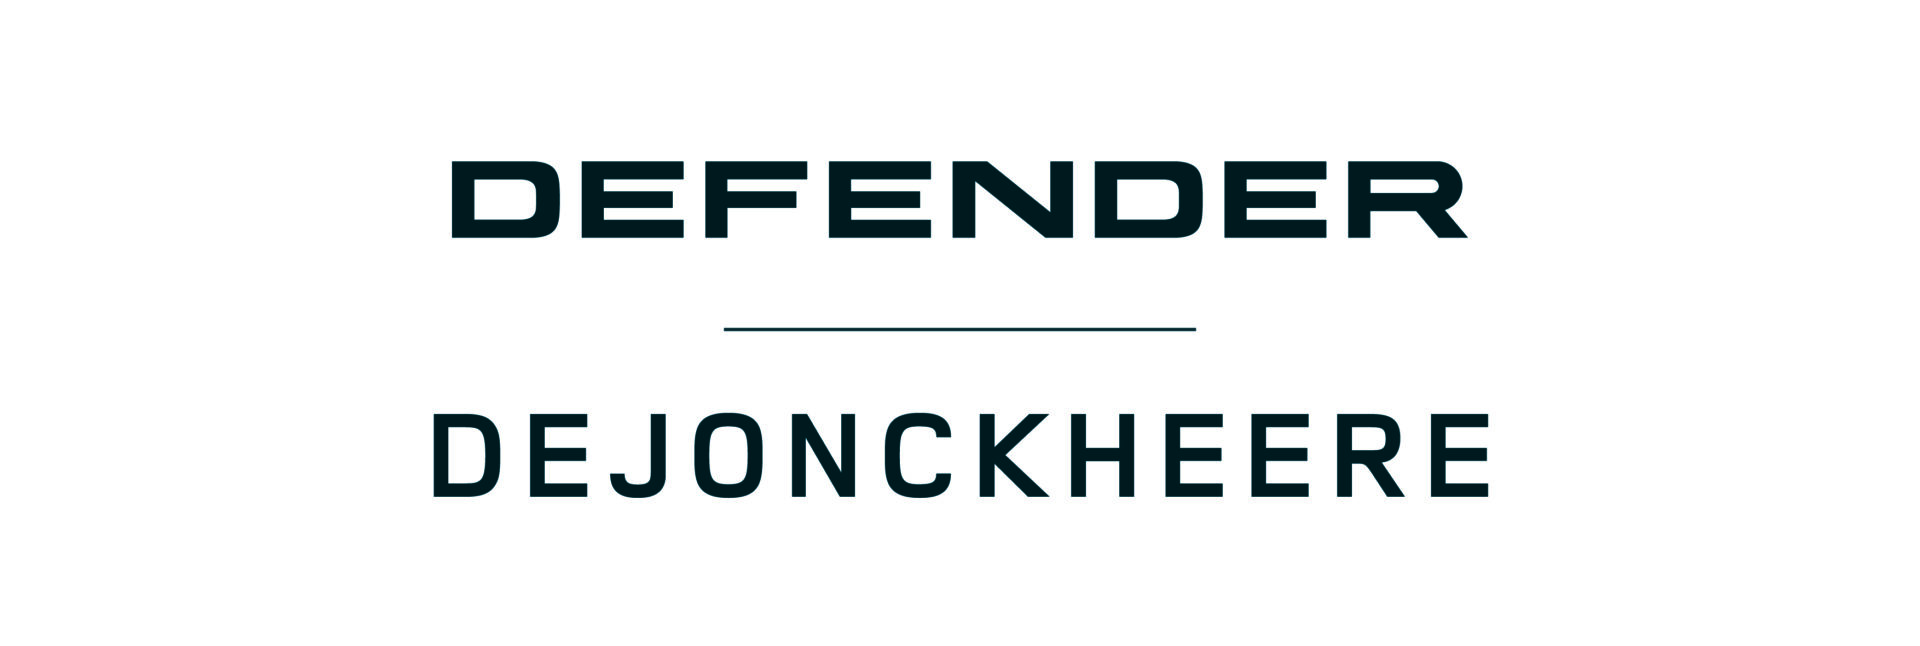 JLR Dealer - logo Dejonckheere Defender2 (002)